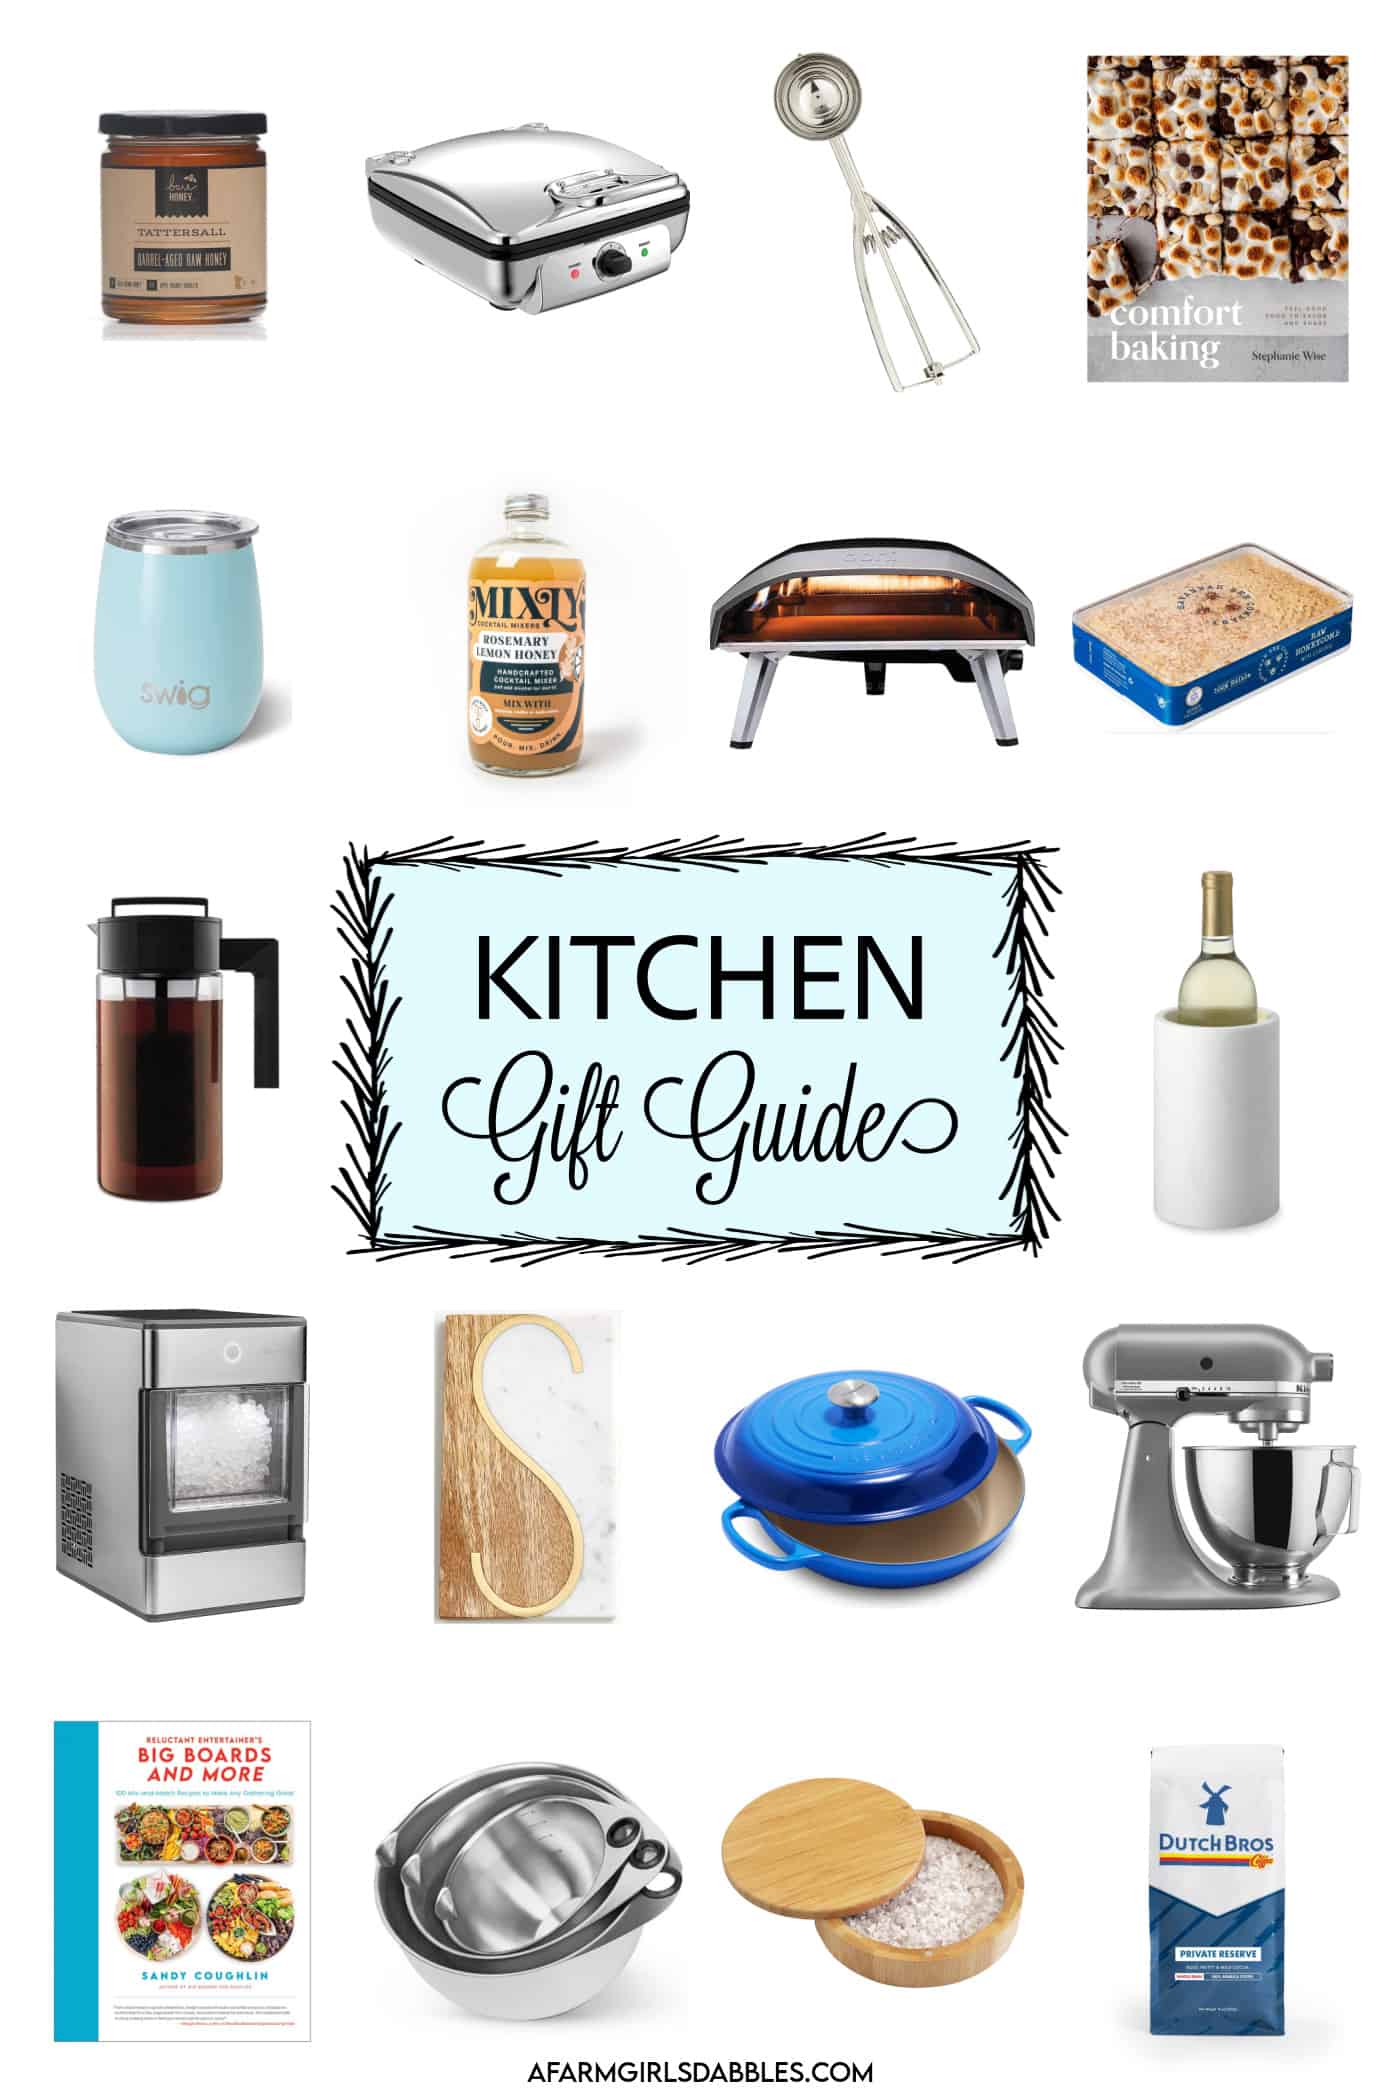 https://www.afarmgirlsdabbles.com/wp-content/uploads/2022/11/kitchen-gift-guide-2022-afarmgirlsdabbles.jpg